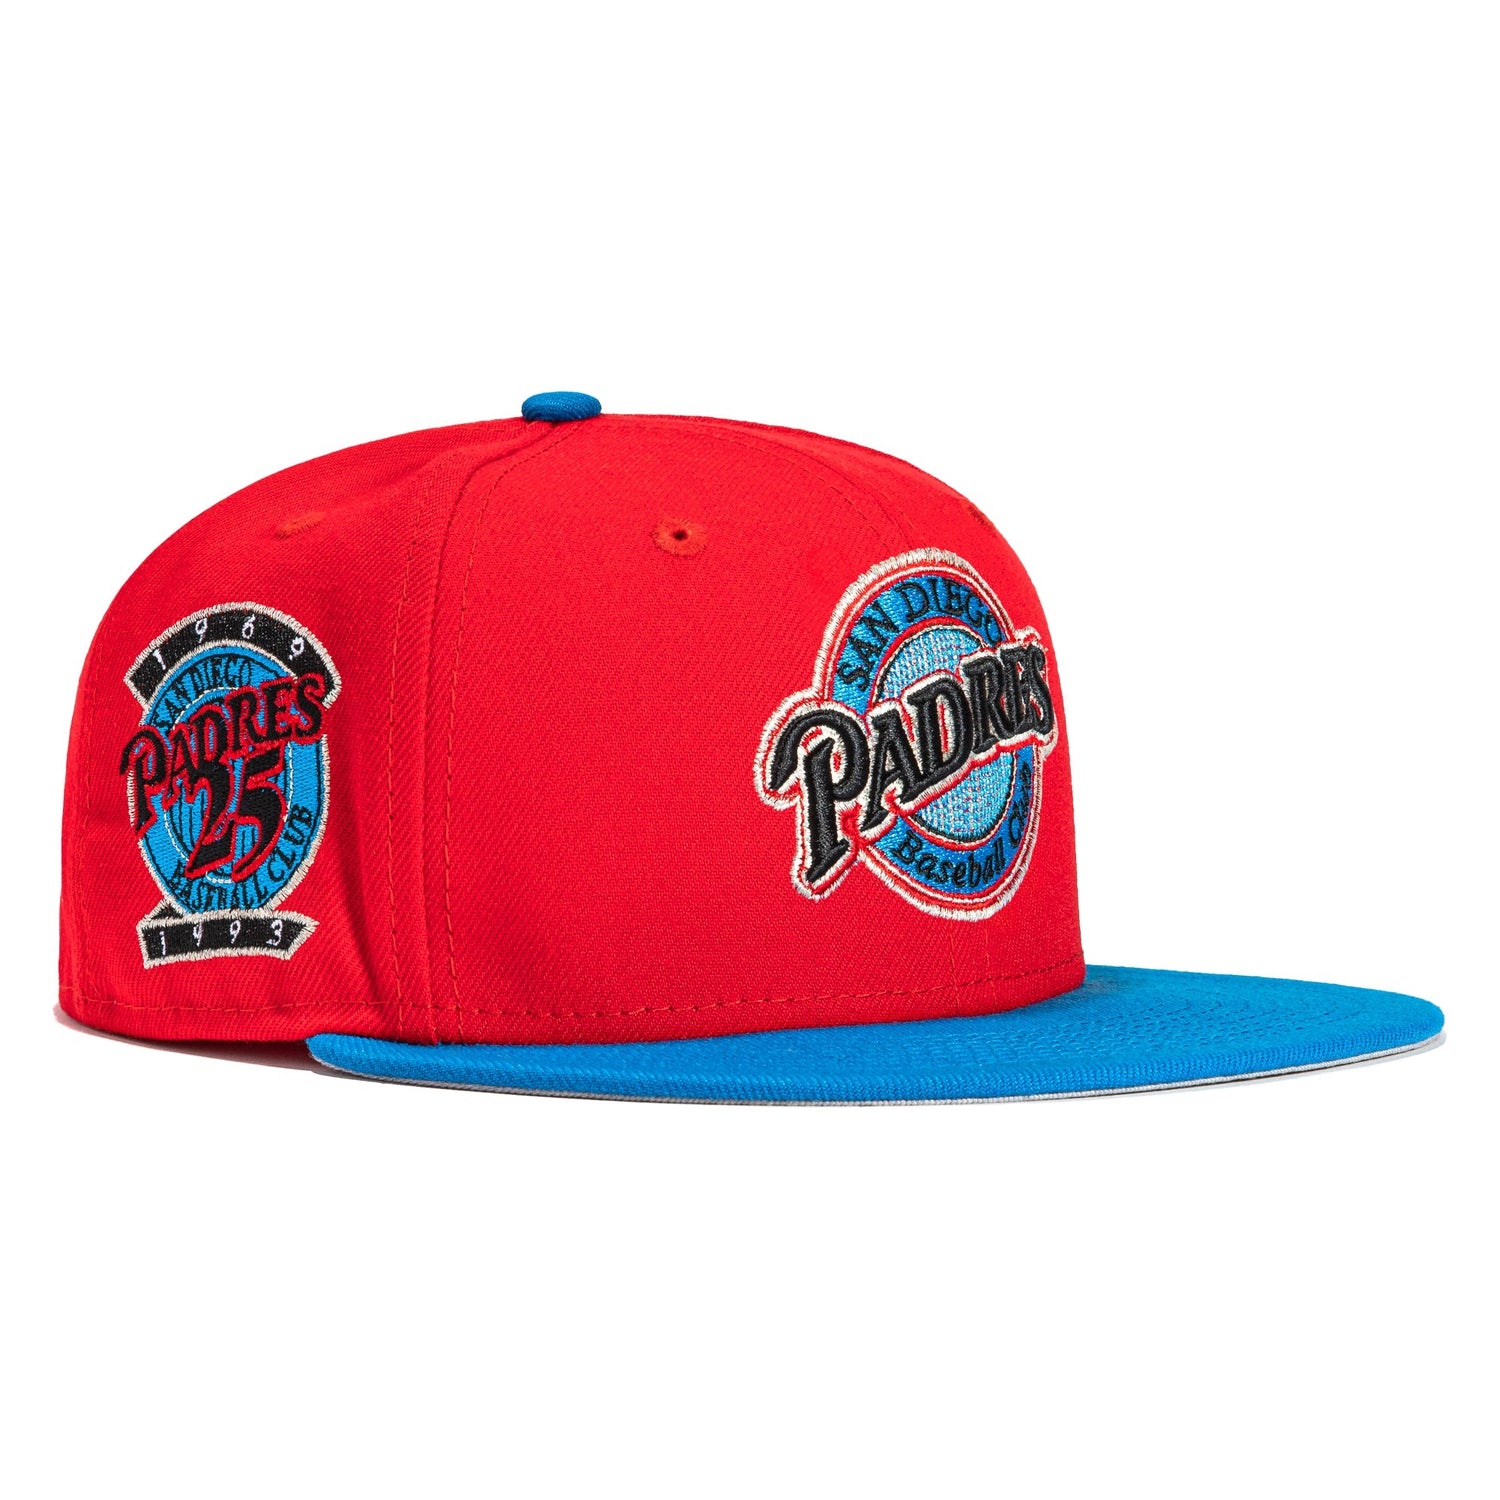 Golden State Warriors New Era 59Fifty Hat Cap Size 7 1/2 Neon